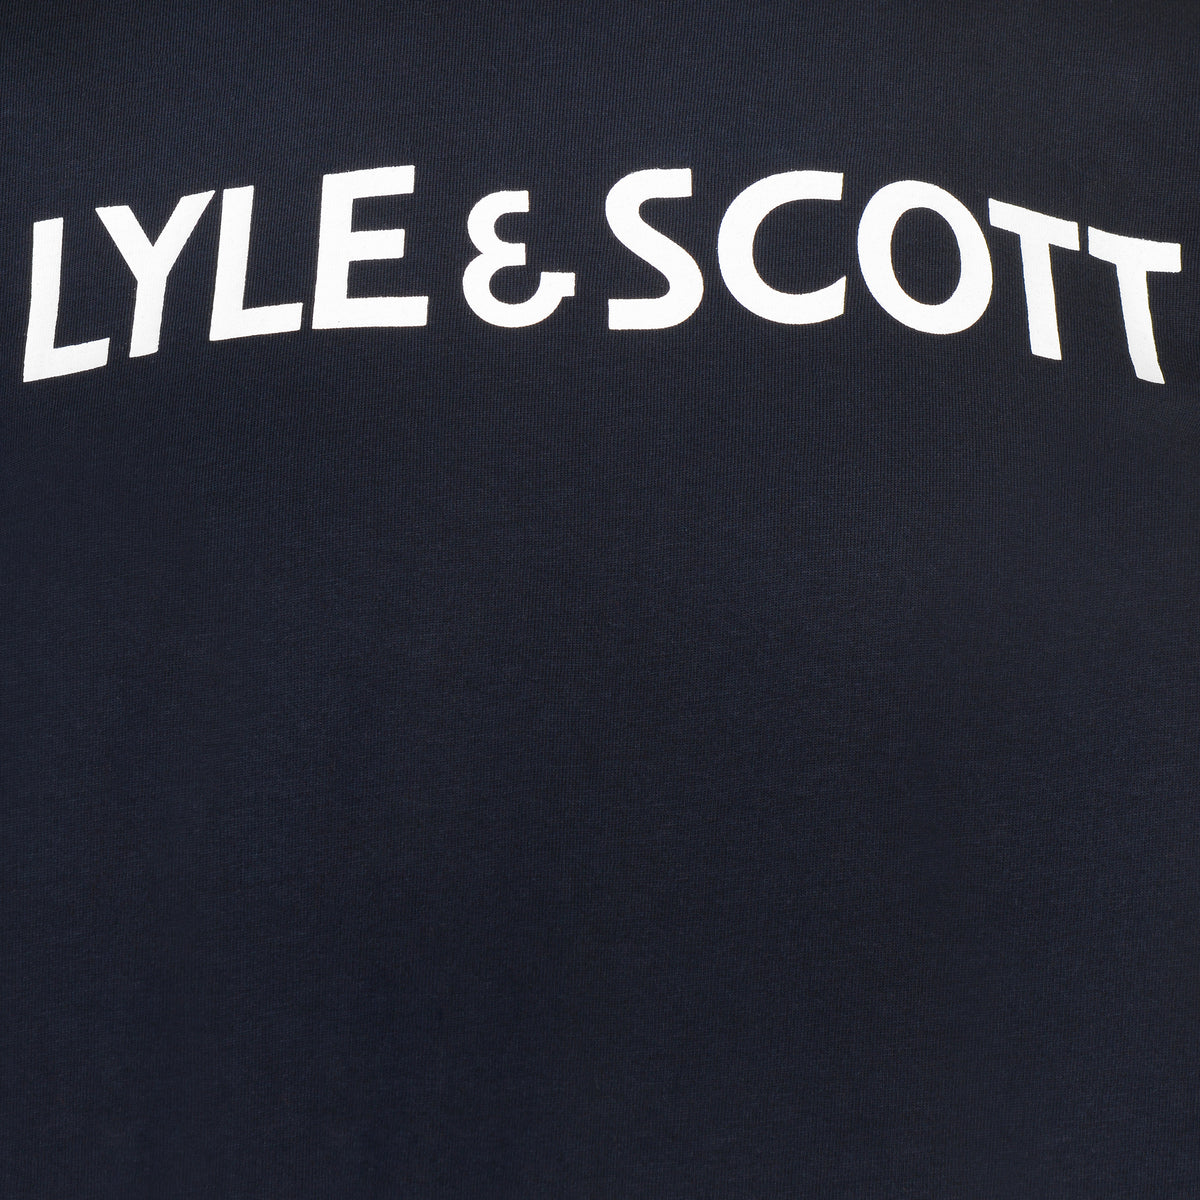 Lyle & Scott Boys 'Text Tee' Short Sleeved T-Shirt (Navy Blazer, 8-9 Years), 03, Lsc0896, Navy Blazer